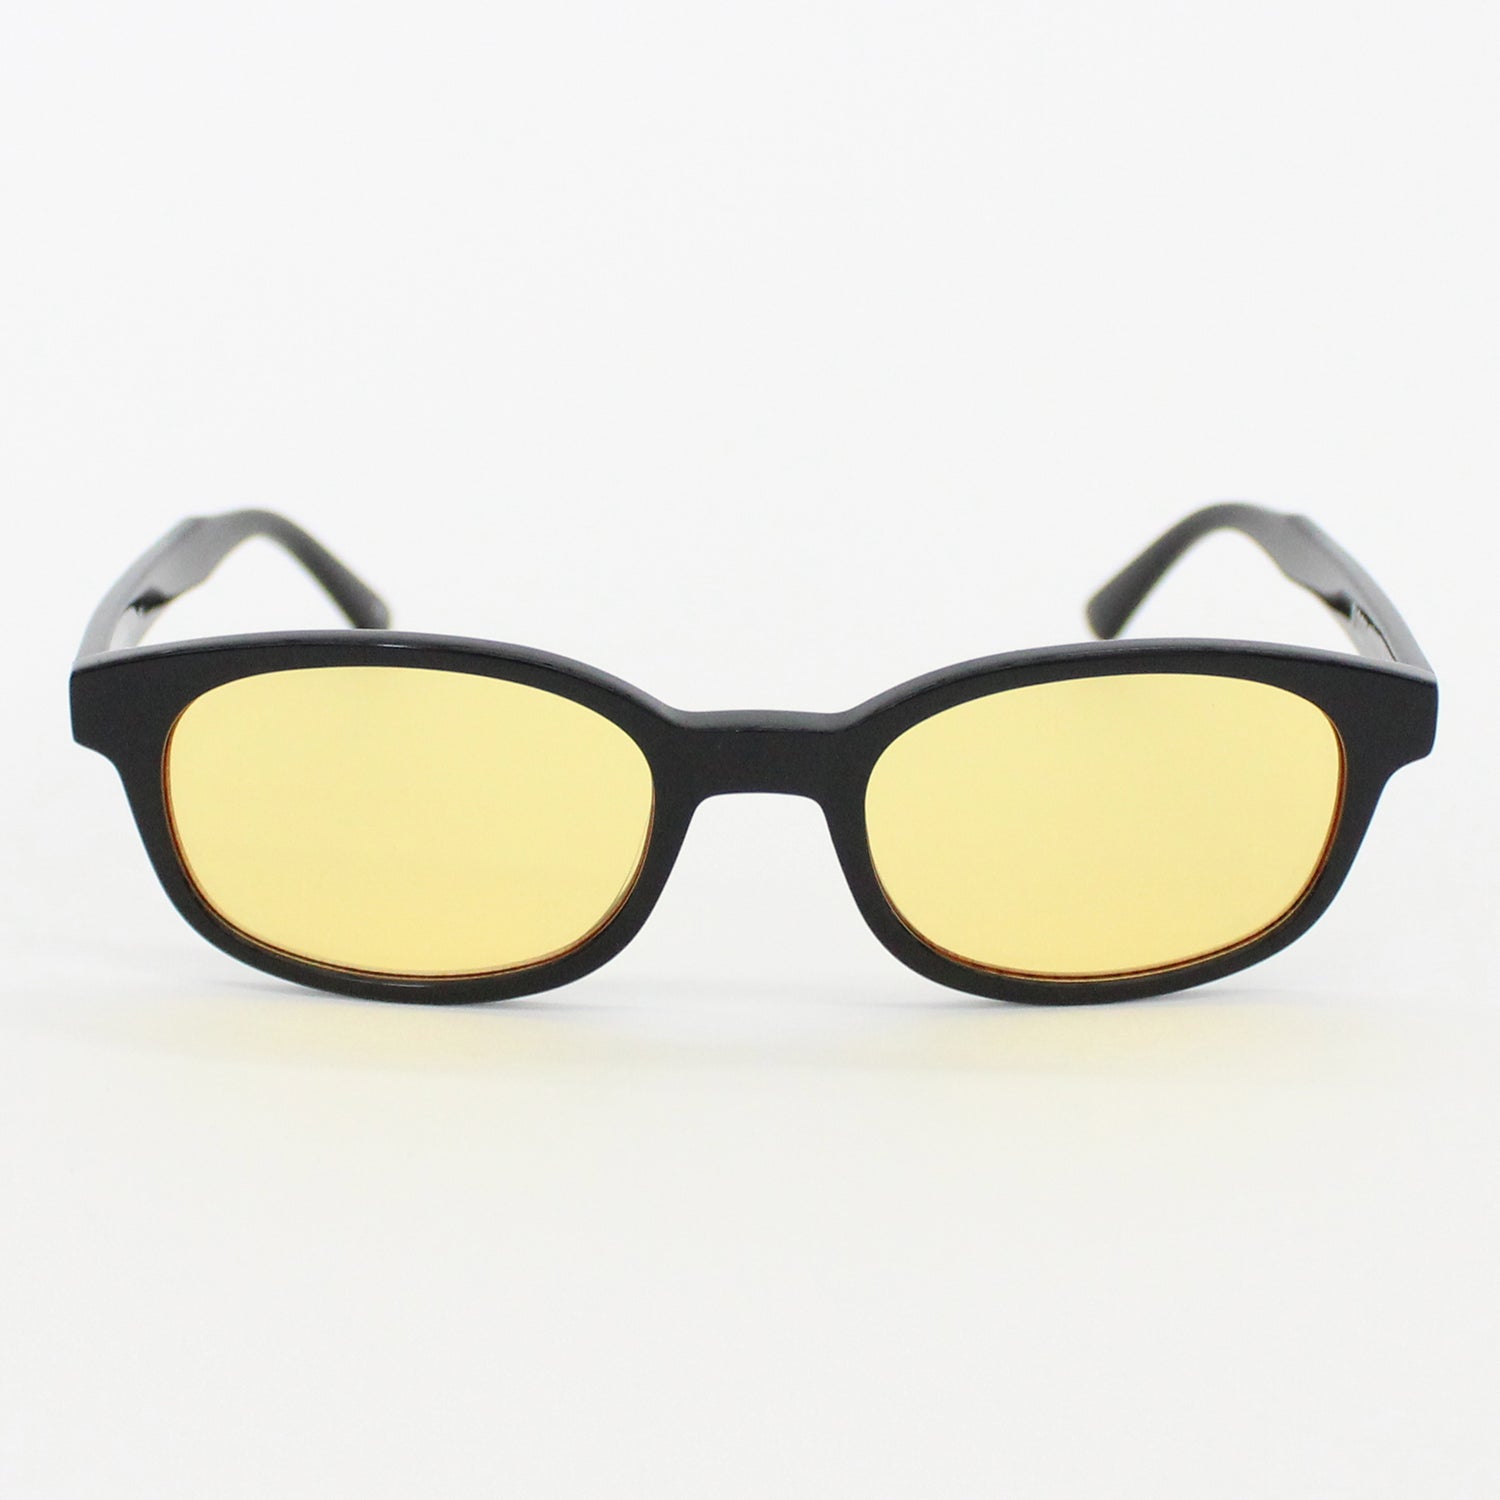 Unibase Glasses - Yellow